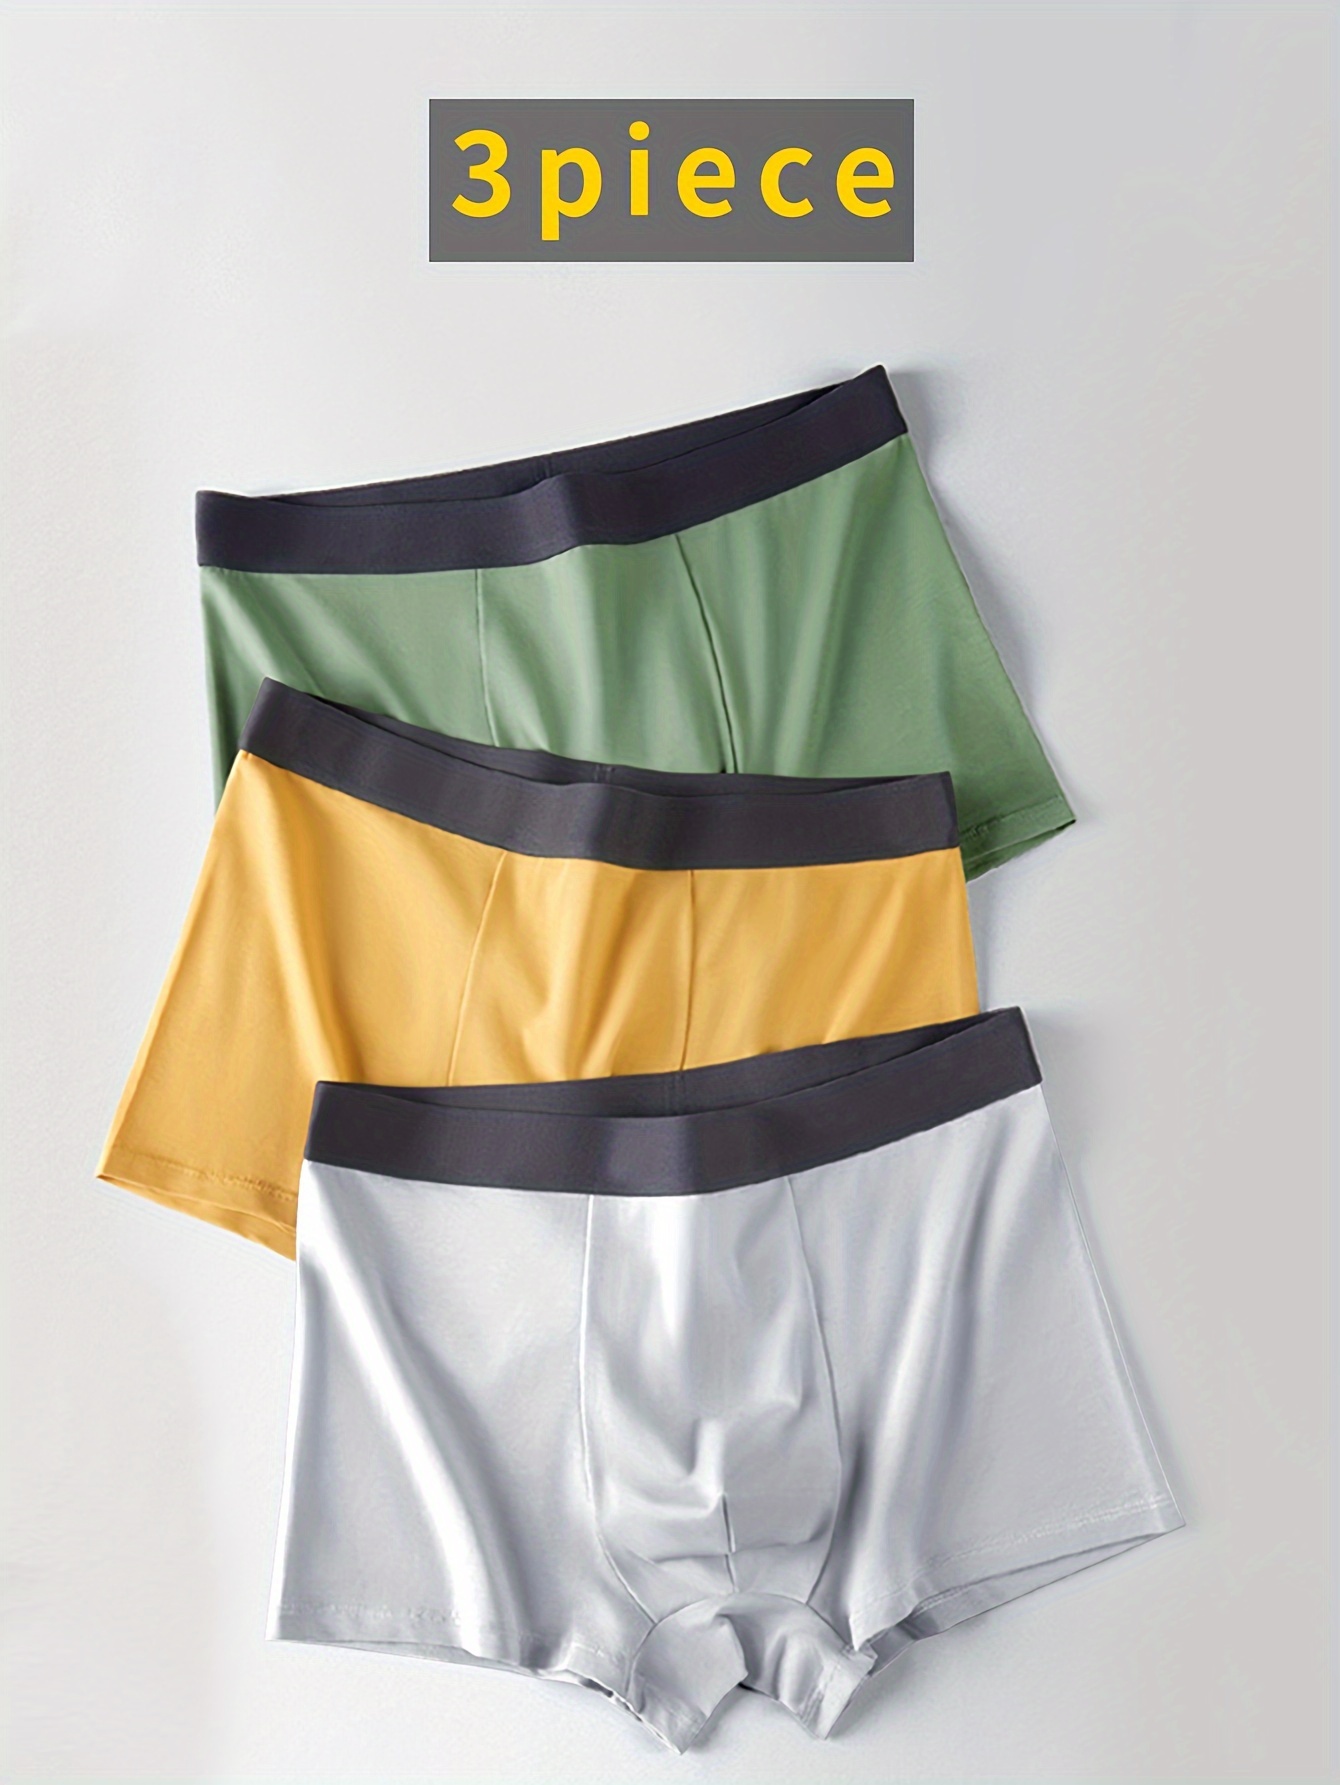 Men's Underwear 'hello' Print Antibacterial Crotch - Temu